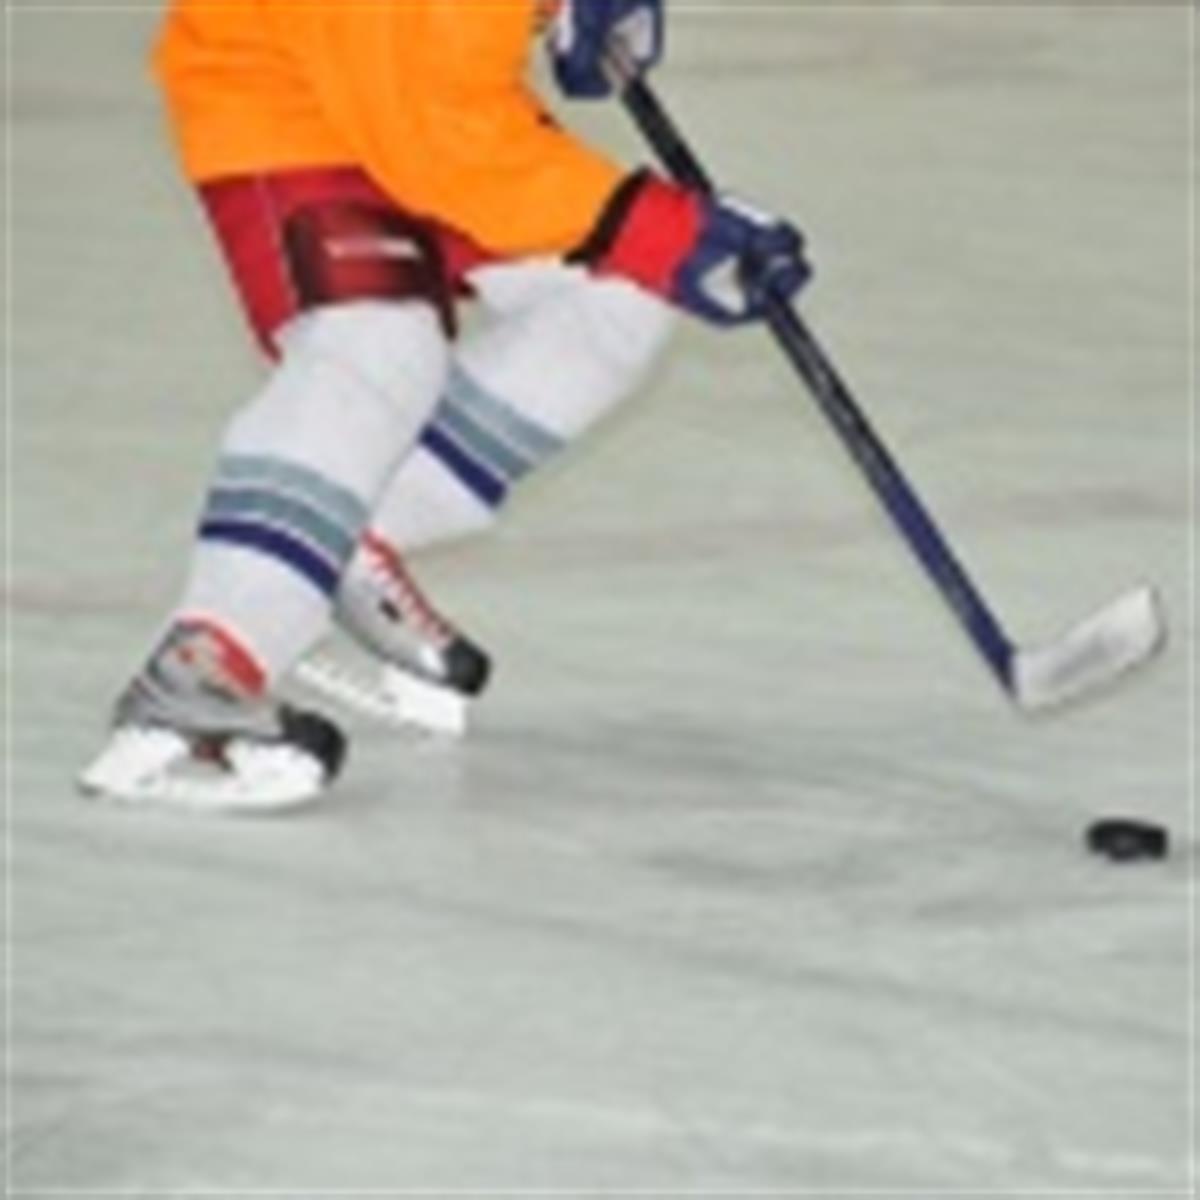 Quadriceps contusion in ice hockey player.